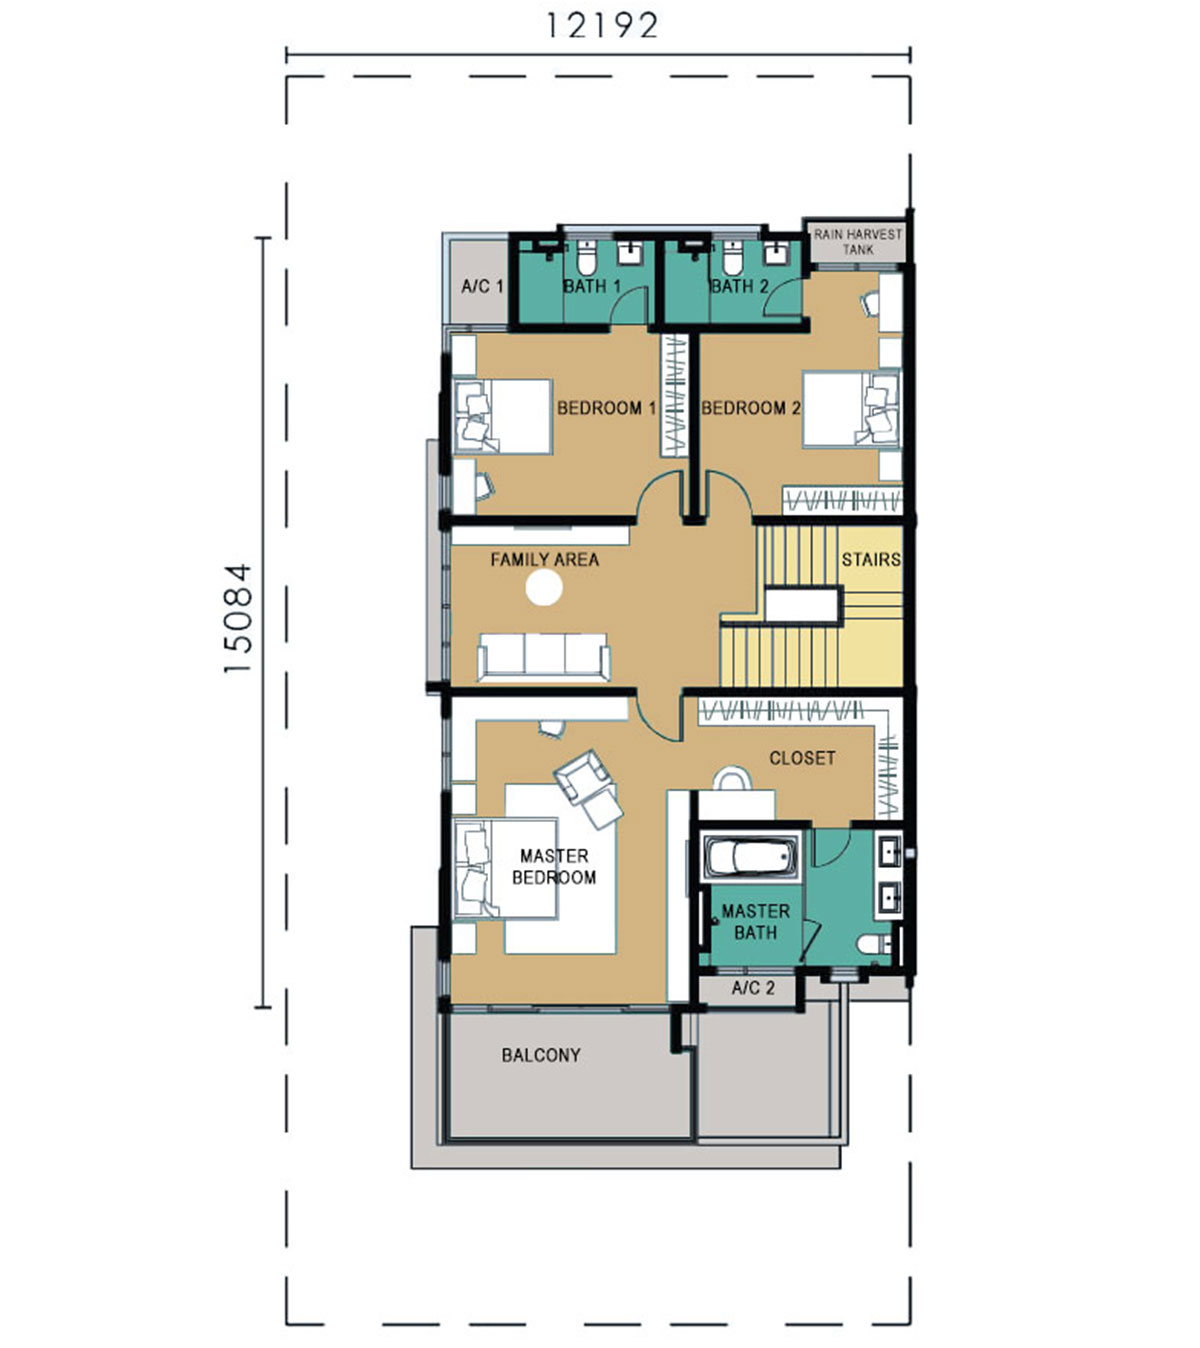 2-Storey Semi-Detached - Type A - First Floor,2-Storey Semi-Detached - Type A - First Floor